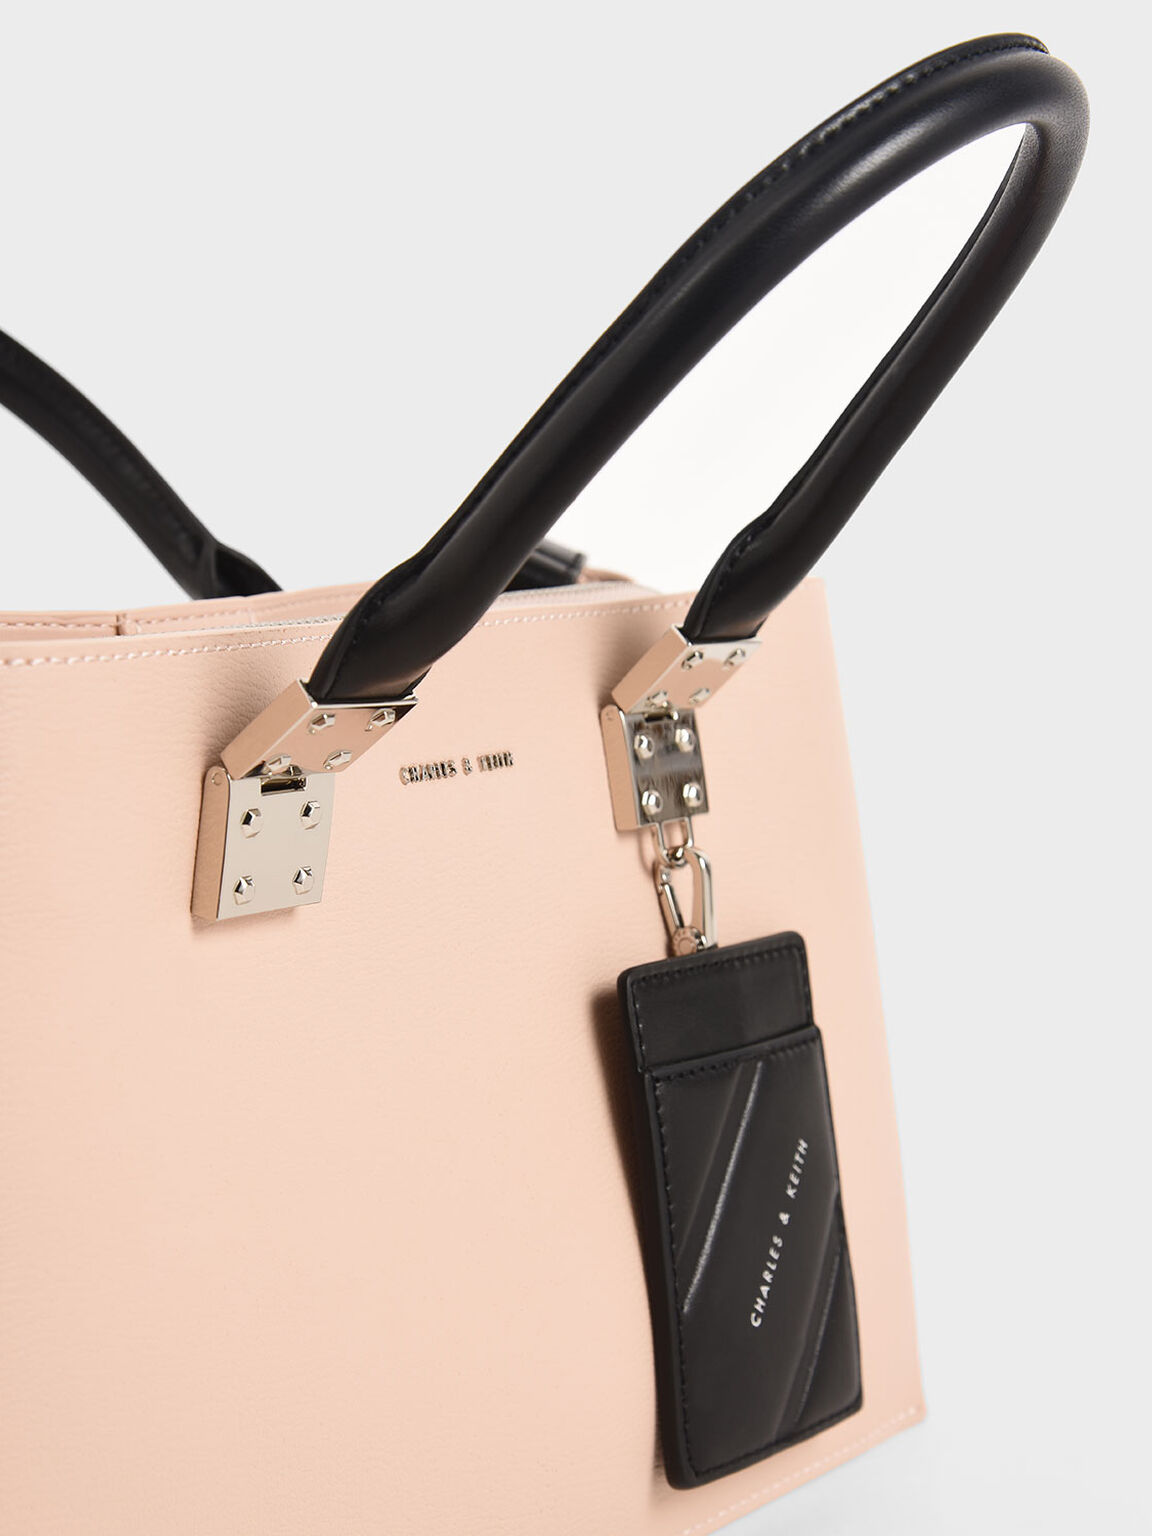 Double Top Handle Structured Bag, Pink, hi-res